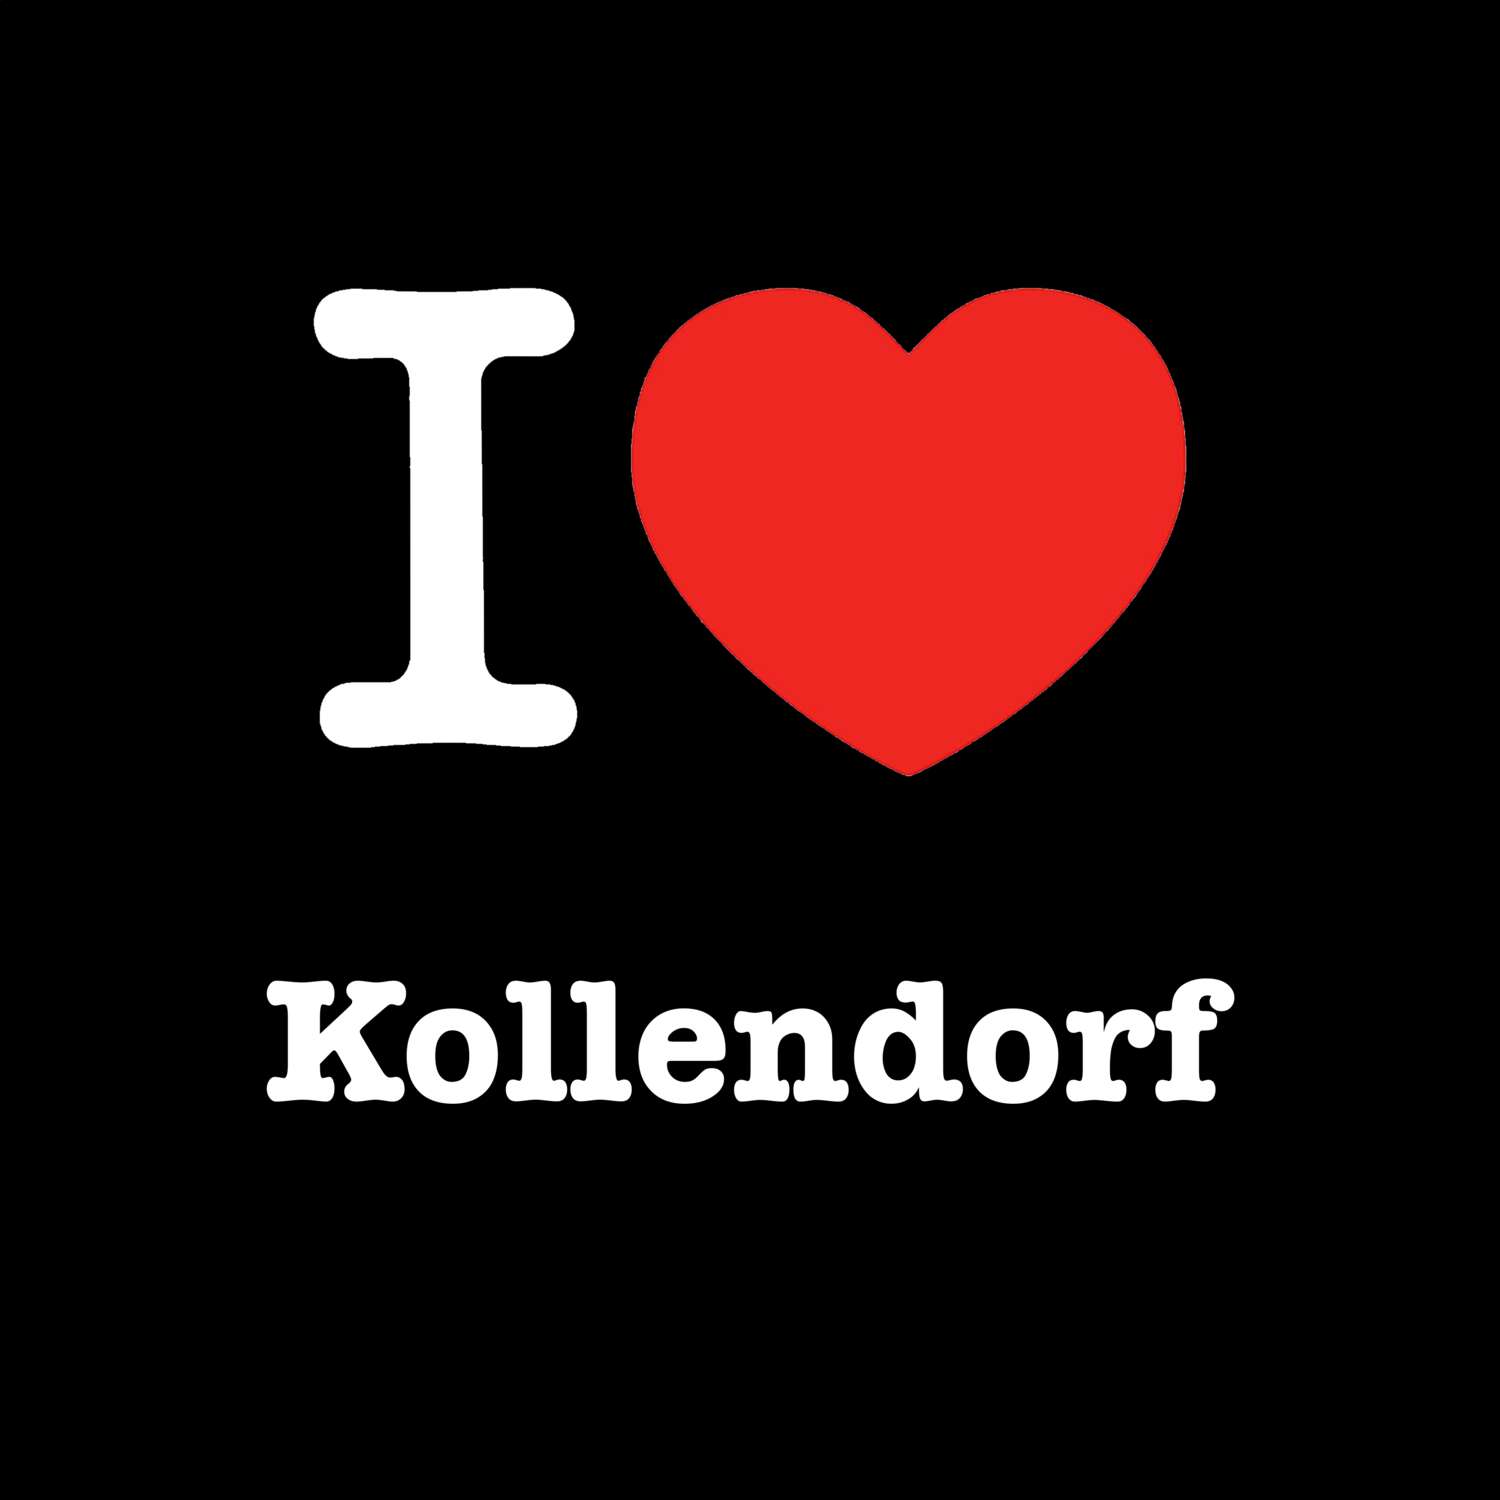 Kollendorf T-Shirt »I love«